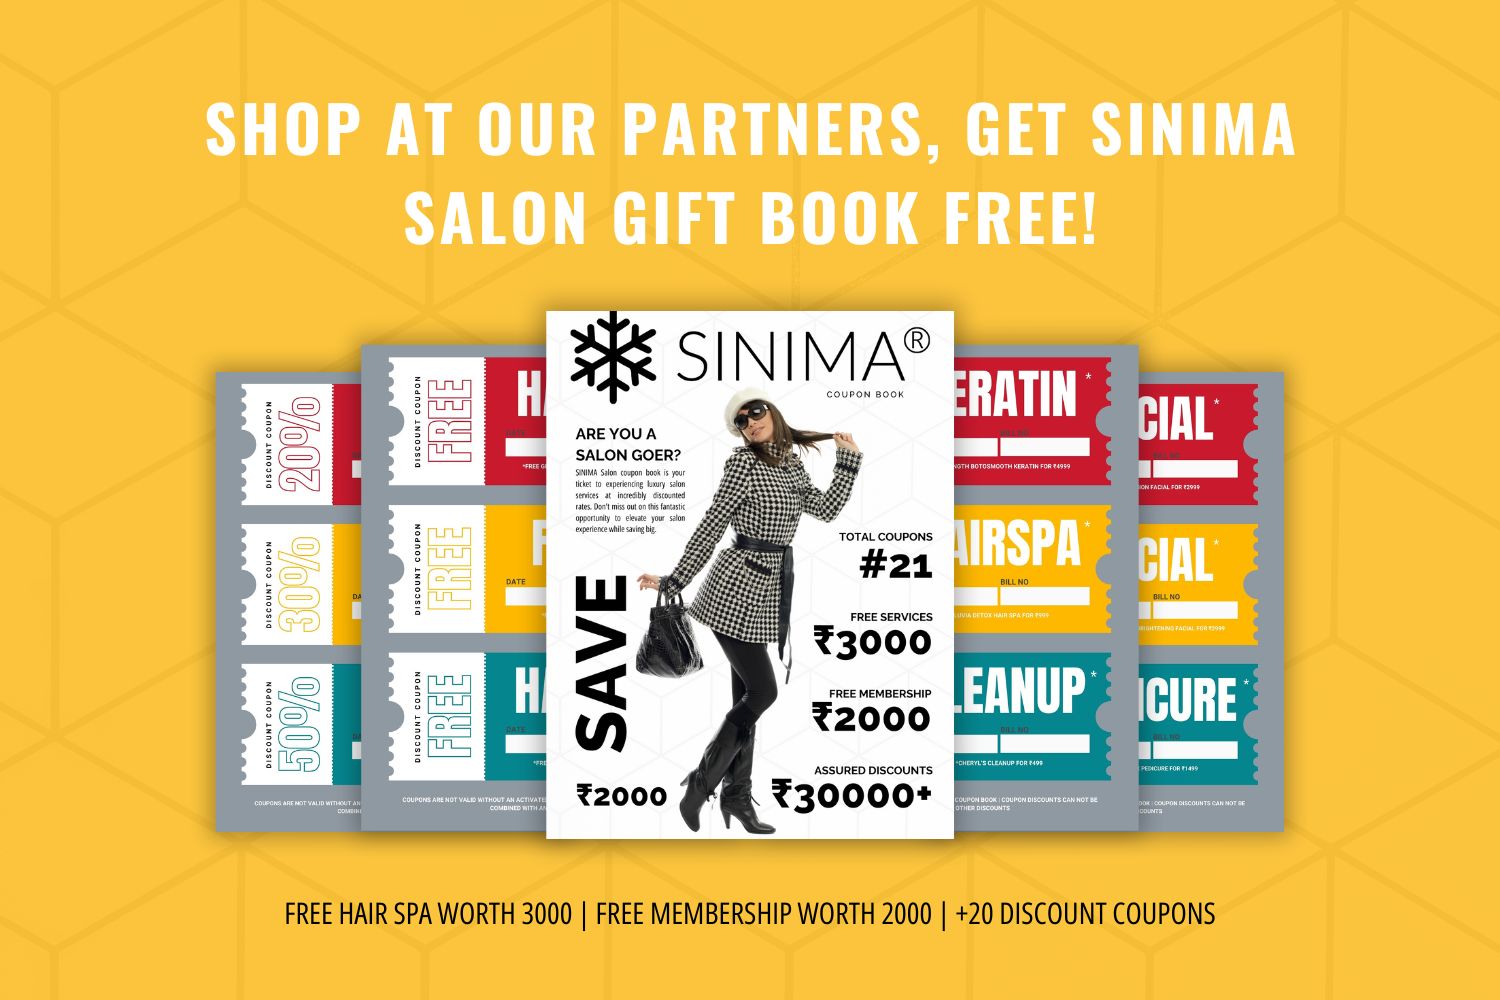 Shop at SINIMA Salon partners to get rewarded.